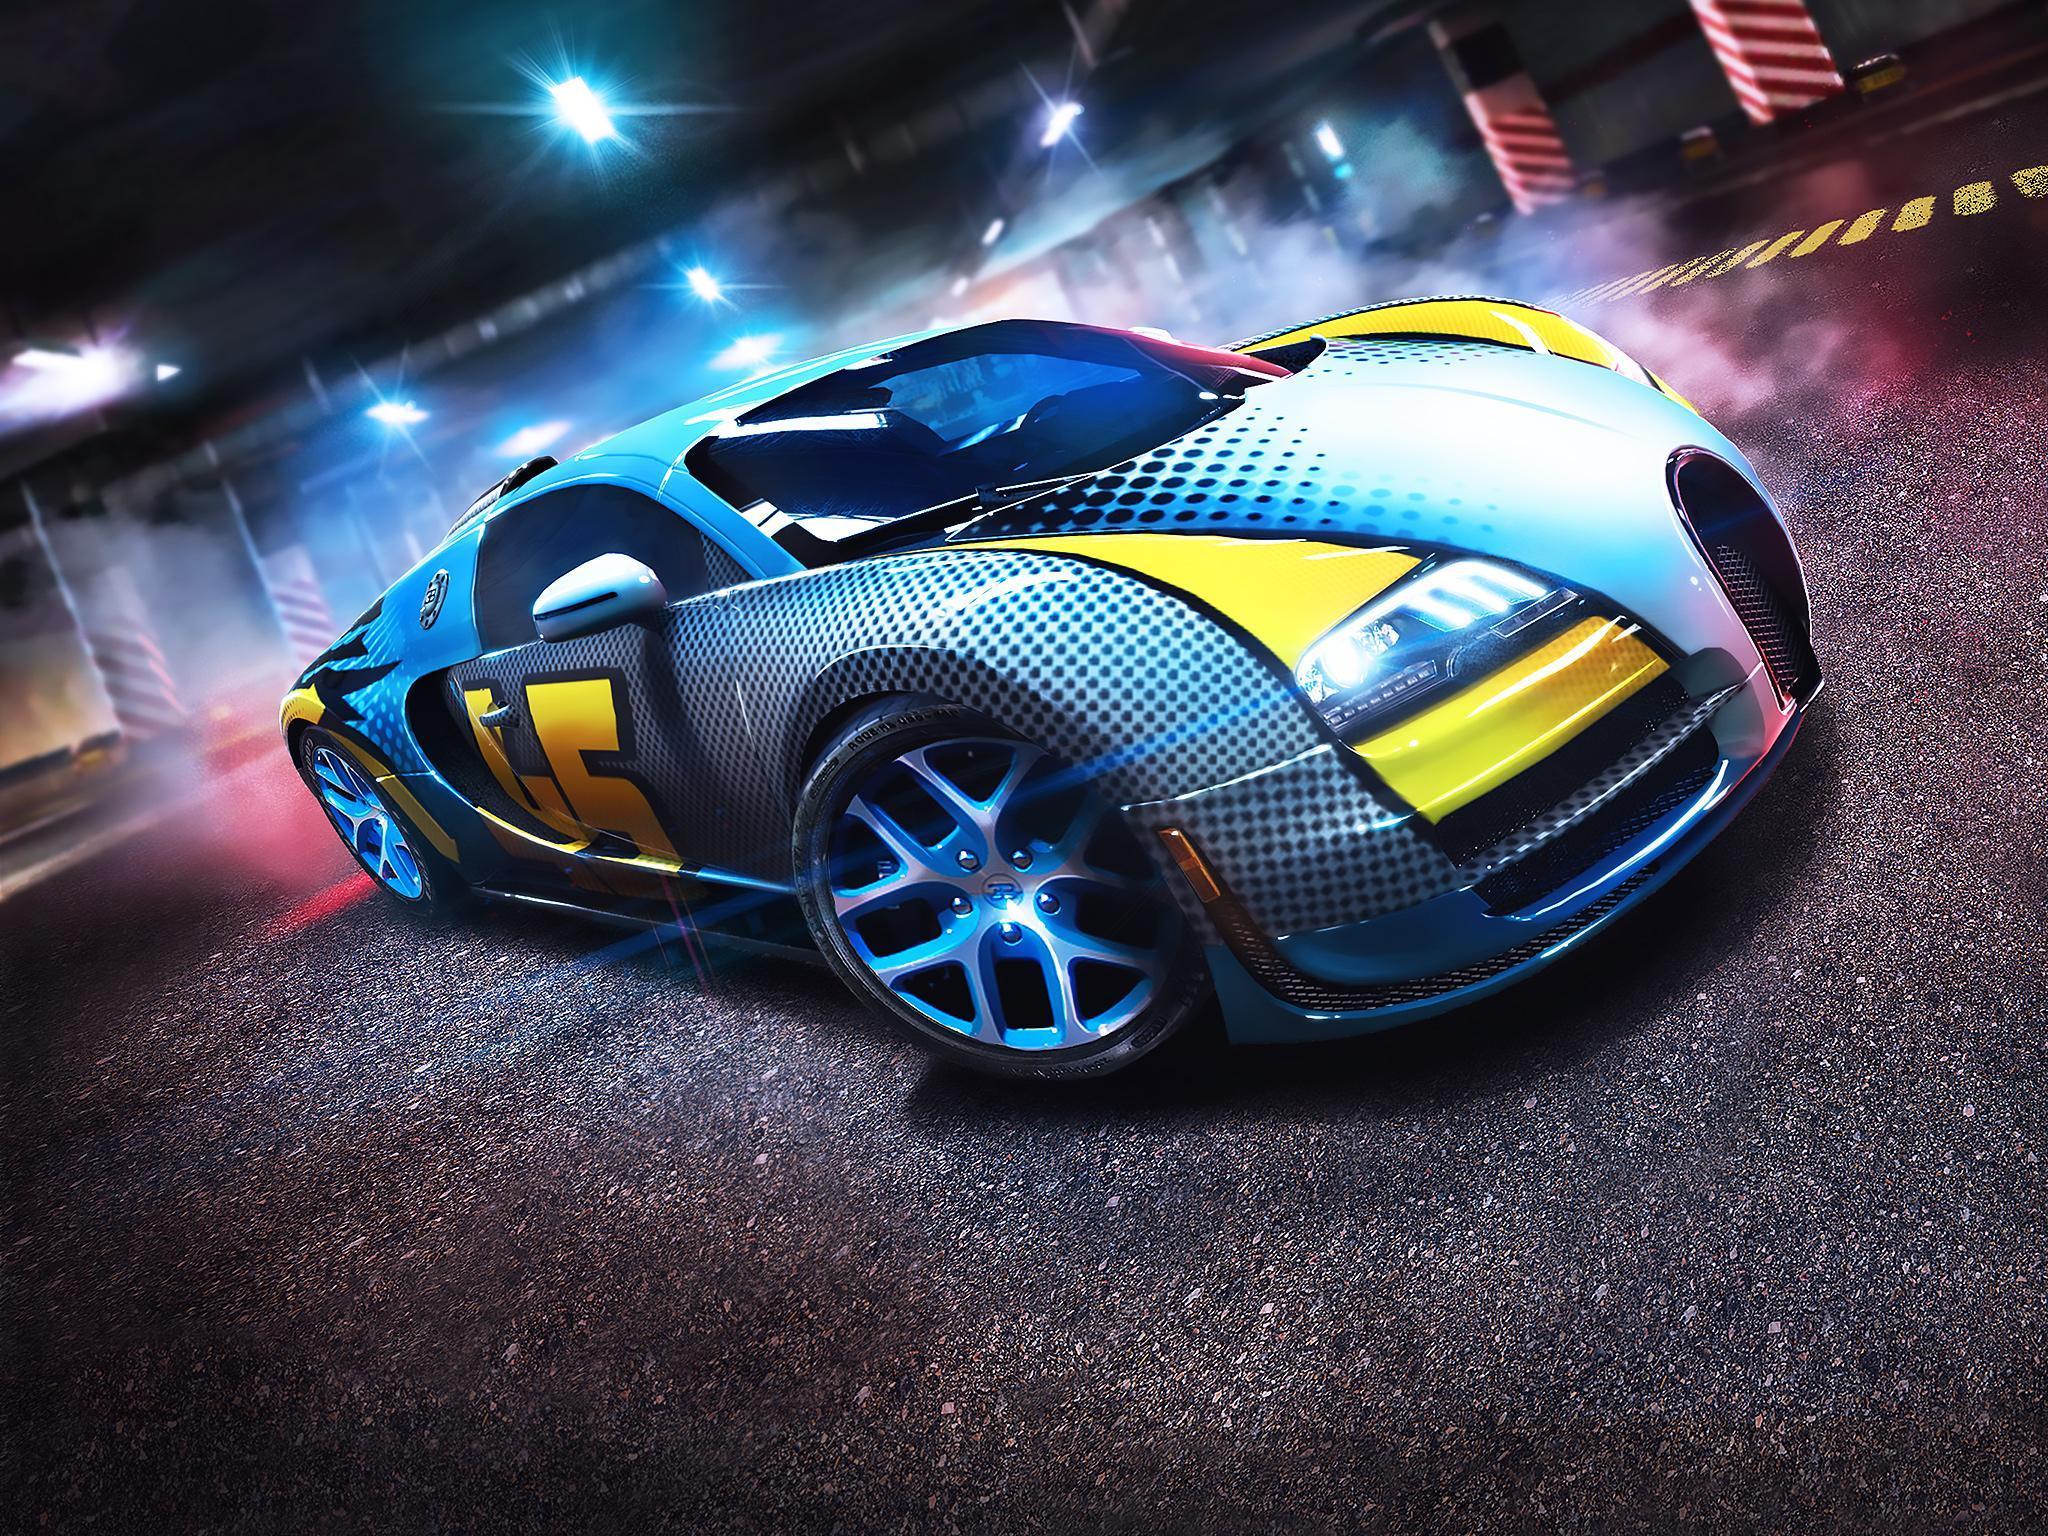 Asphalt 8 Airborne - Fun Real Car Racing Game 5.4.0o Screenshot 17